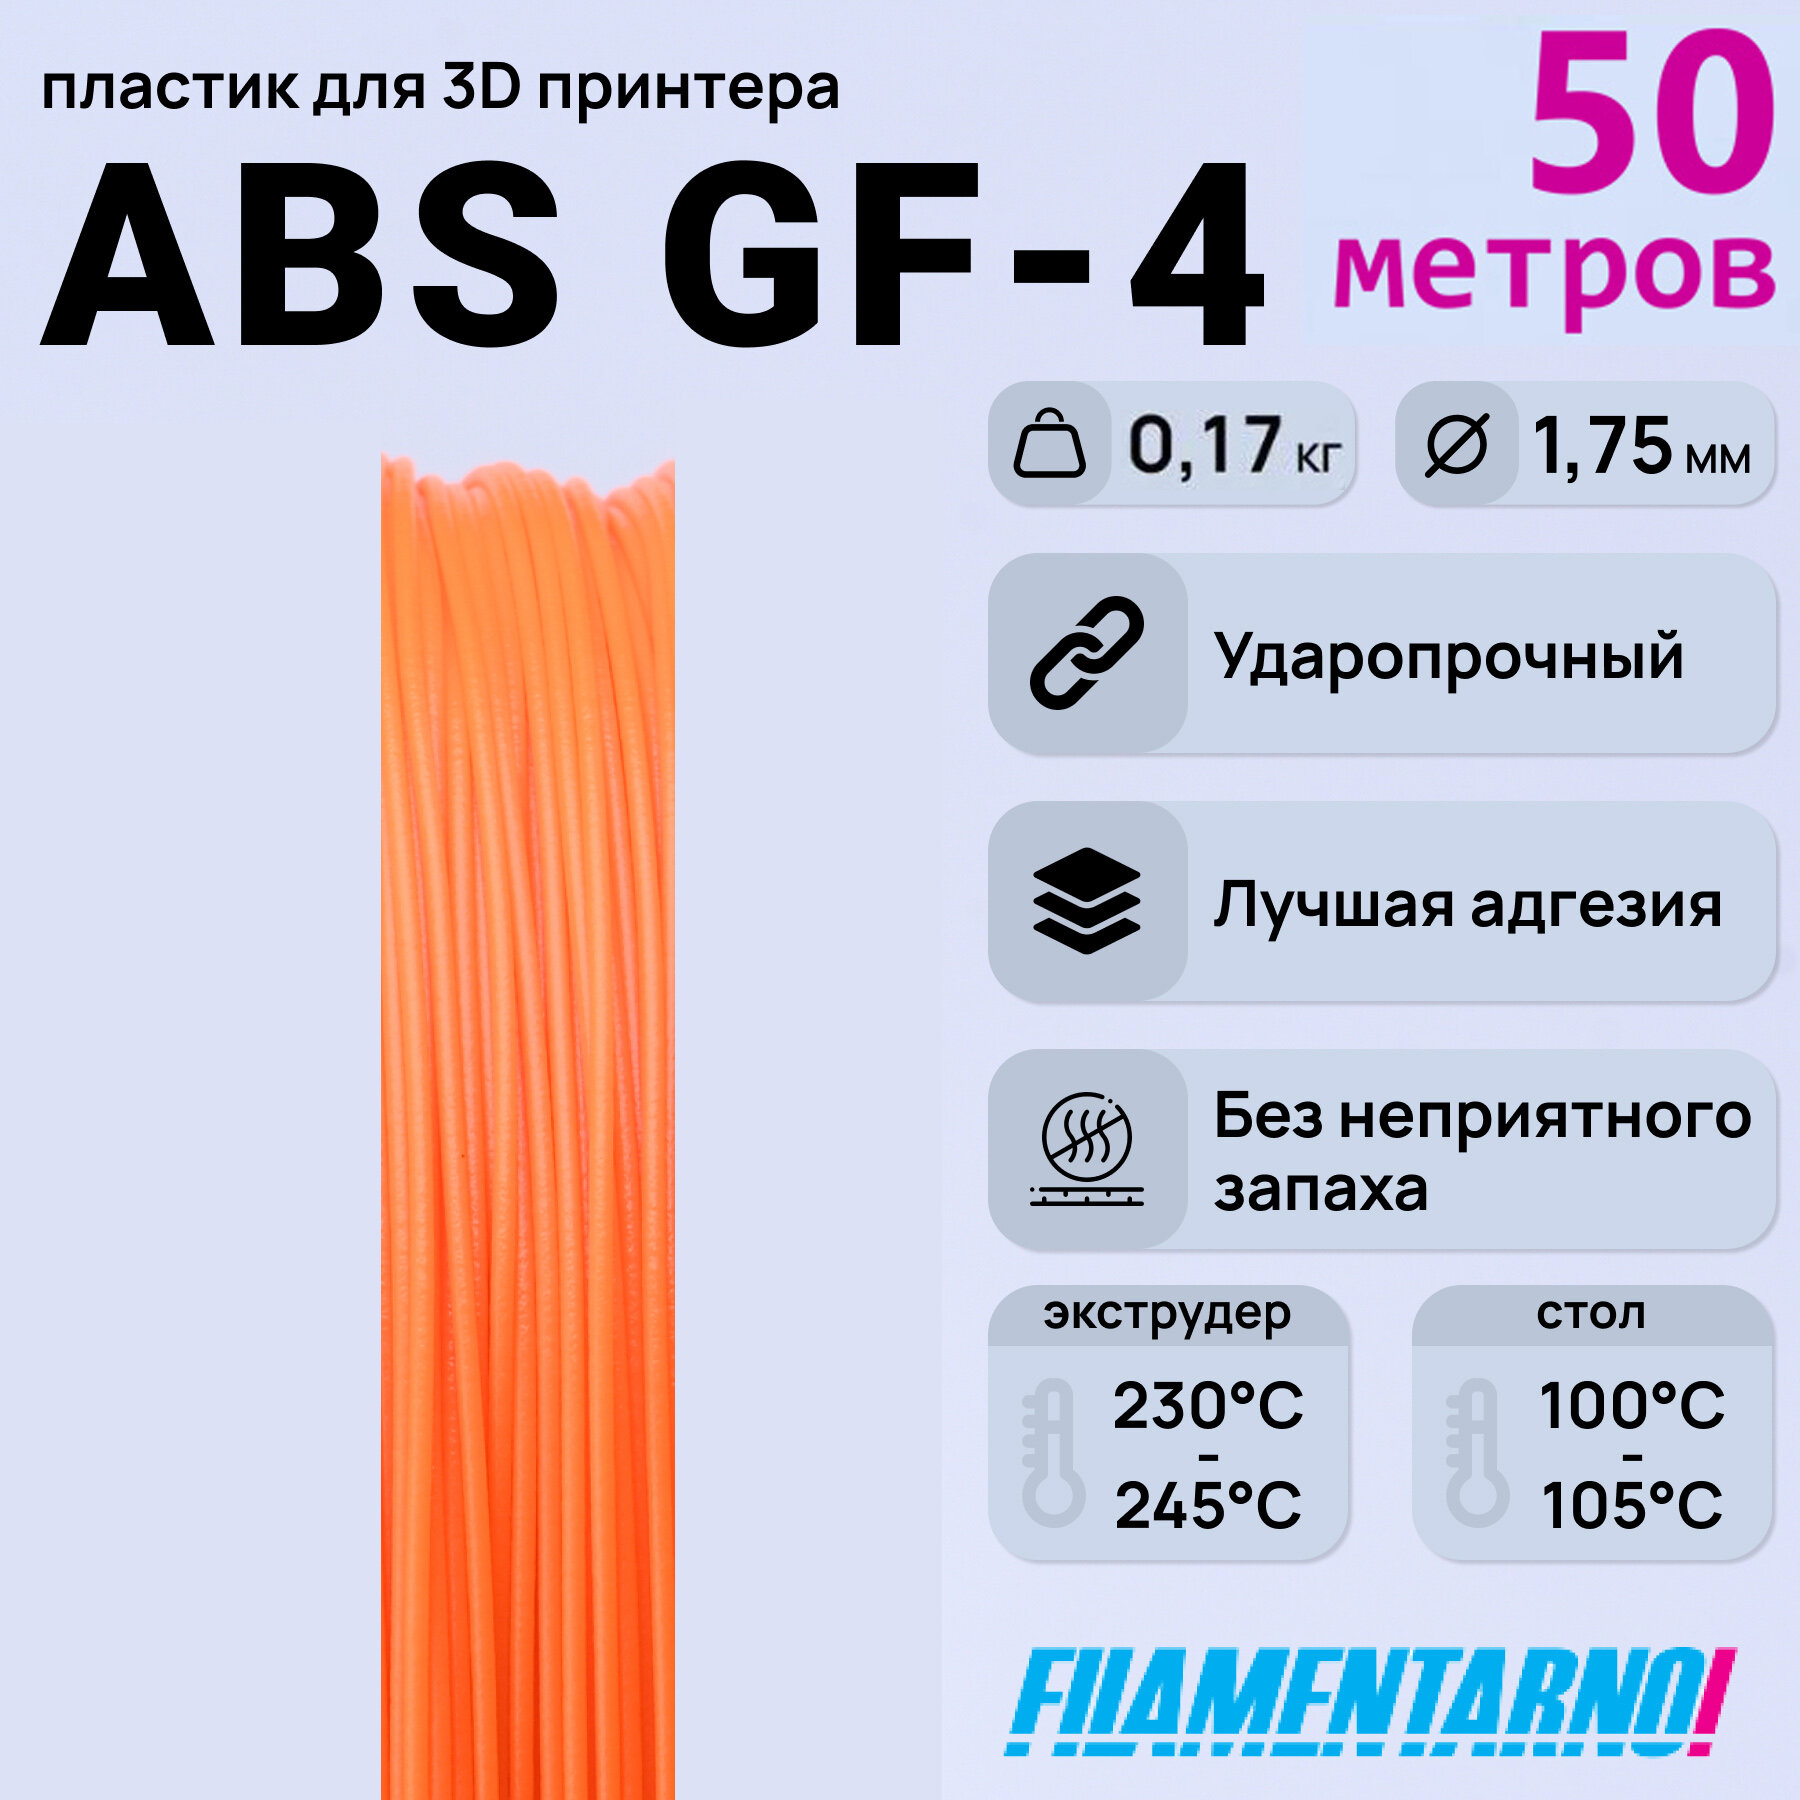 ABS GF-4 оранжевый моток 50 м, 1,75 мм, пластик Filamentarno для 3D-принтера